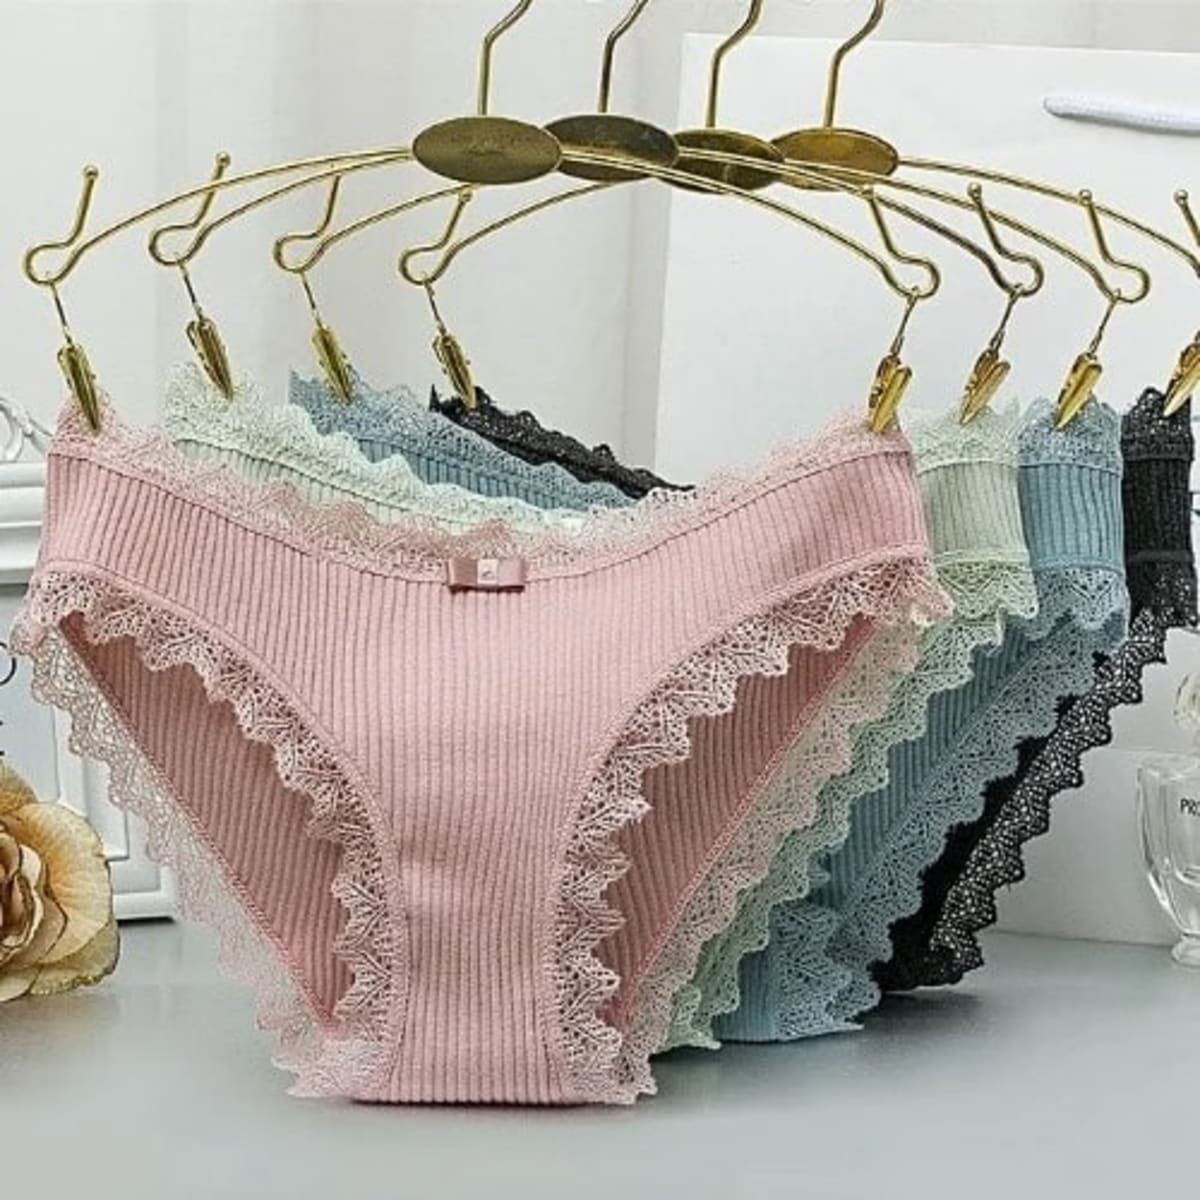 LOT NICE !!5 Women Bikini Panties Brief Floral Lace Cotton